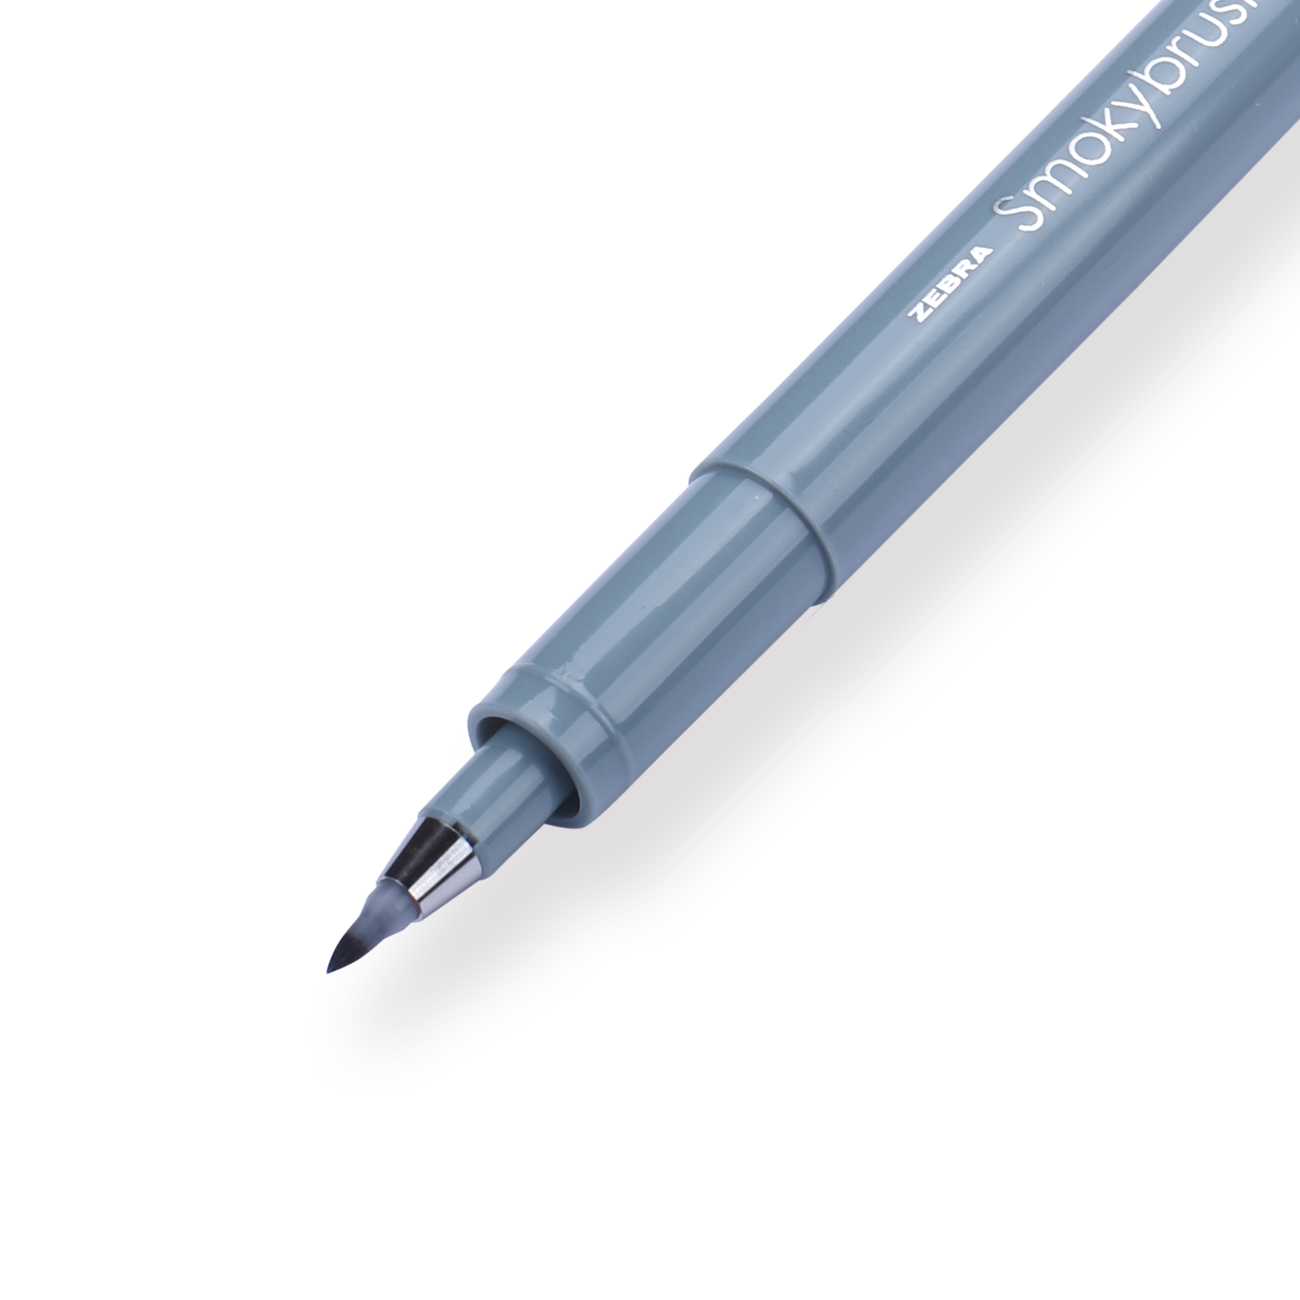 Zebra Smoky Brush Pen - Set of 5 - B - Stationery Pal